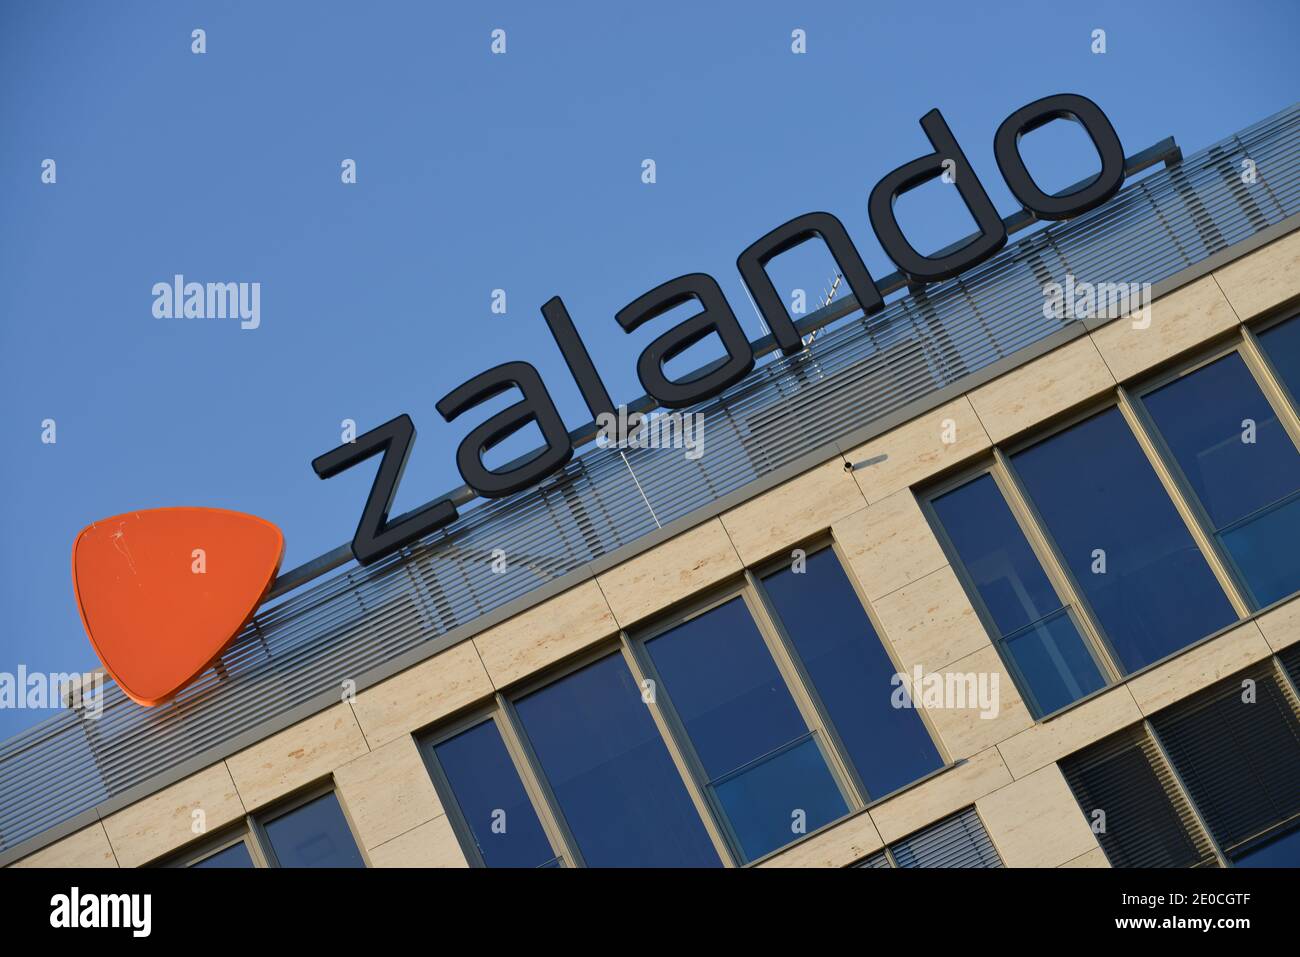 Zalando logo hi-res stock photography and images - Page 4 - Alamy